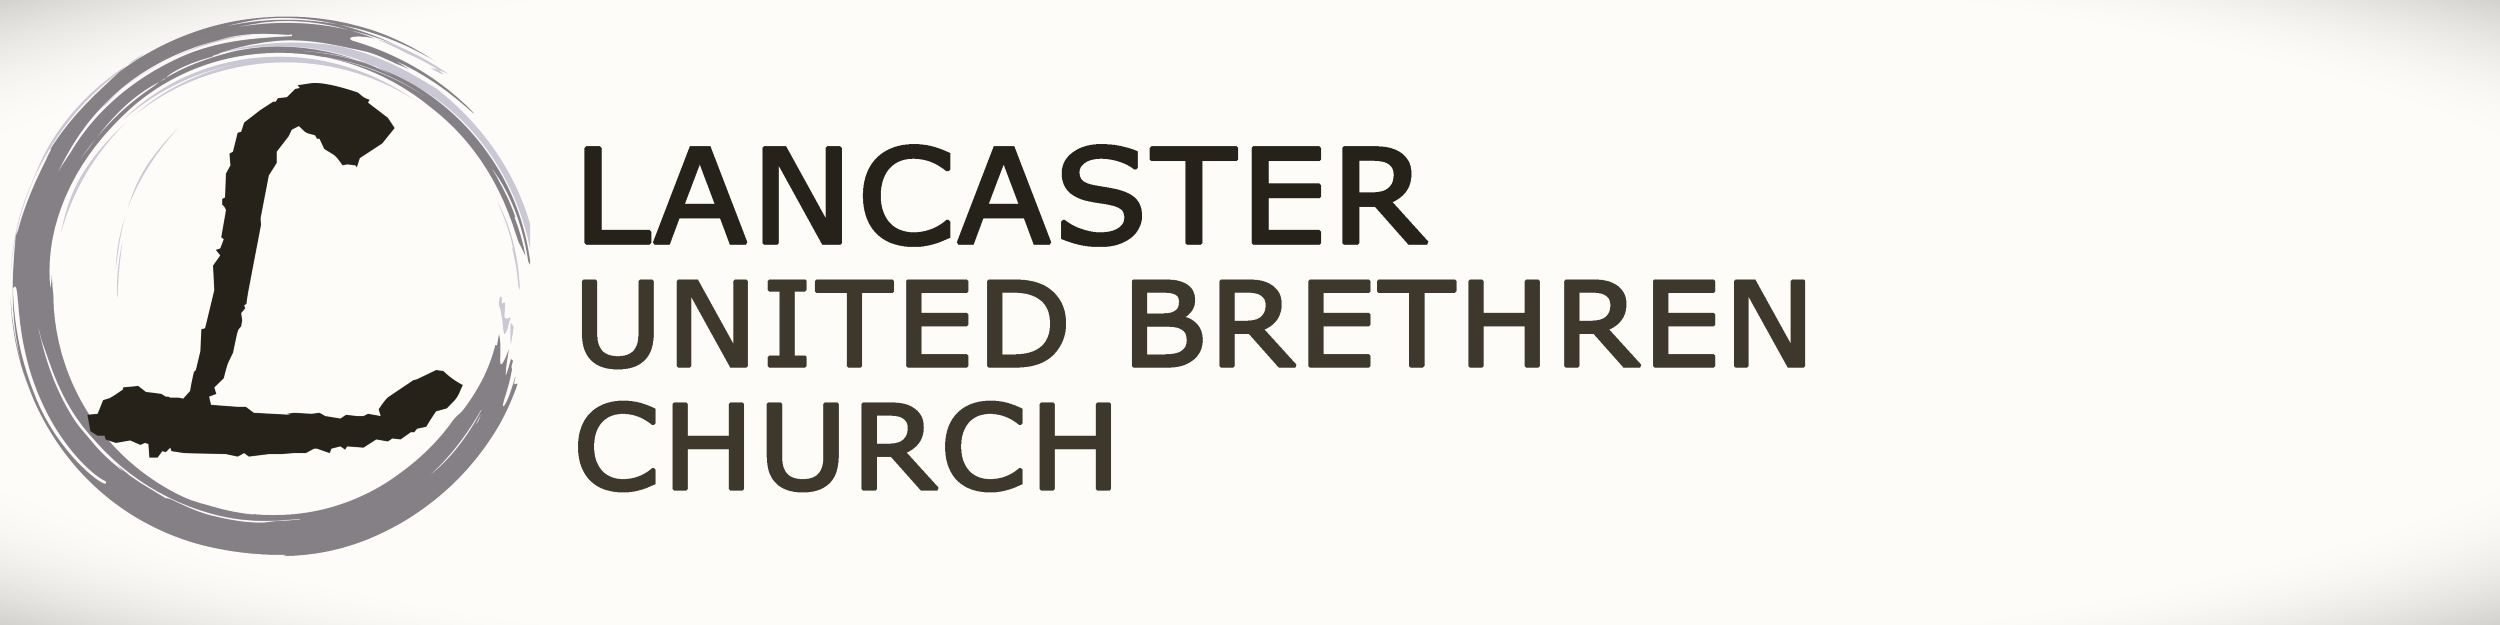 Lancaster United Brethren Church